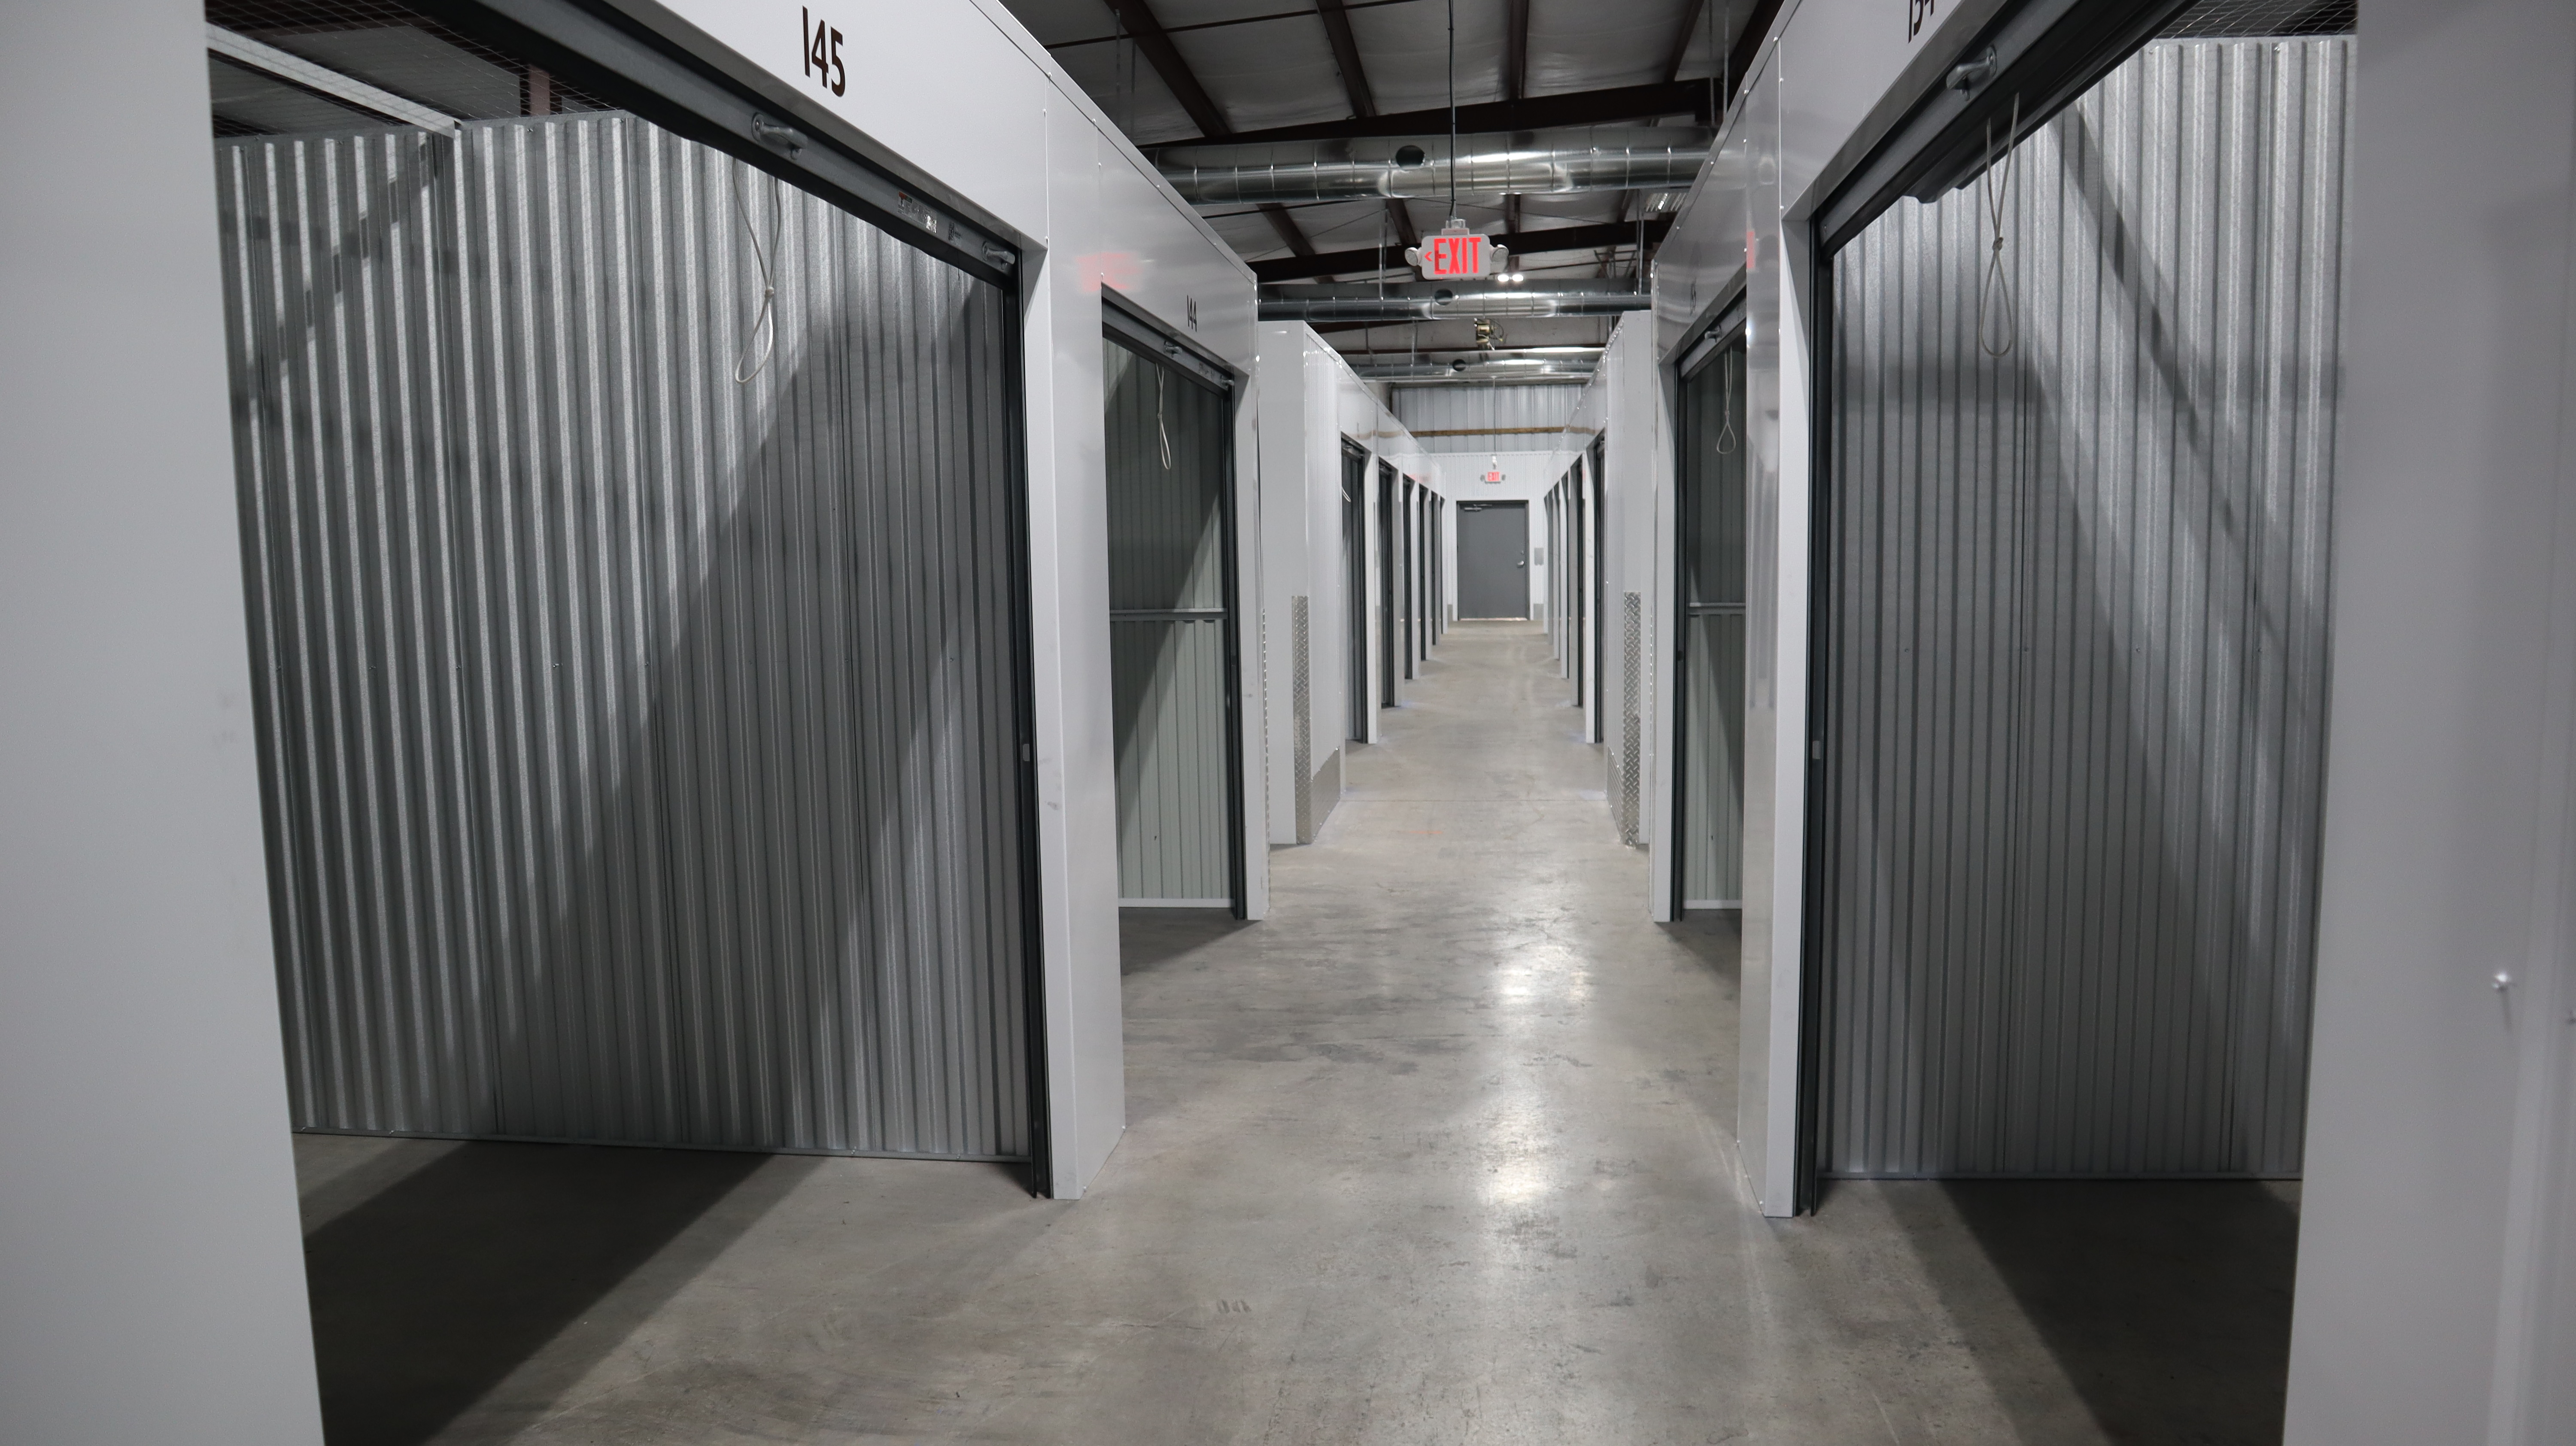 temperature controlled storage units in Guntersville, AL